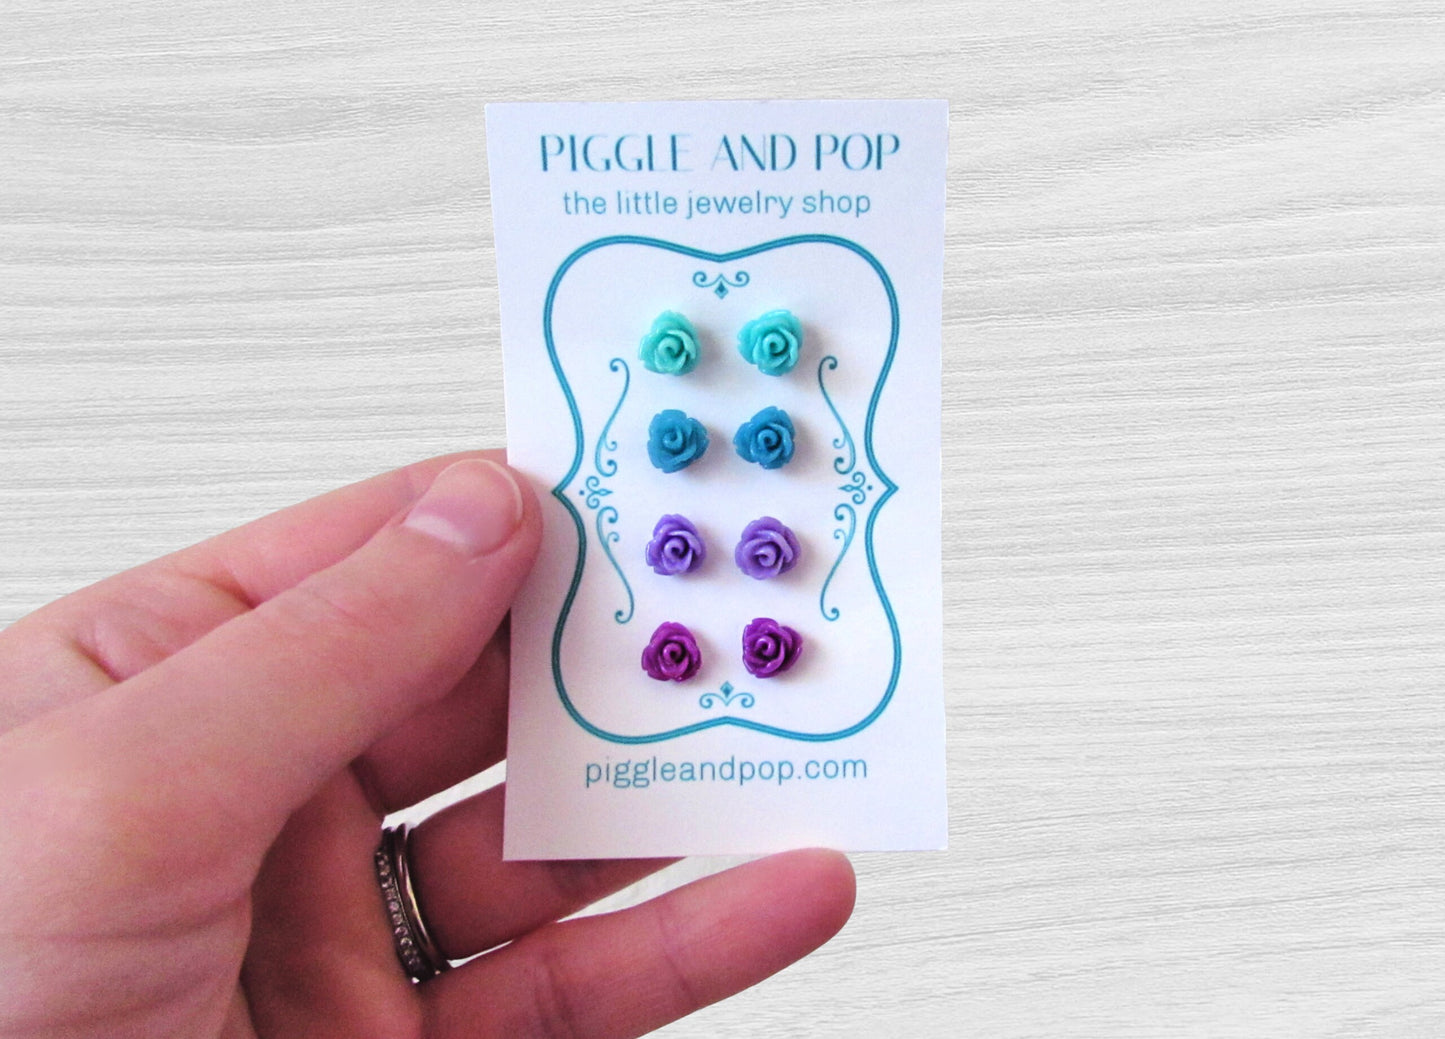 Tiny Rose Earrings. Flower Resin Earrings in Mint Green, Teal Blue, Lavender and Plum Purple. Hypoallergenic Small Flower Stud Earrings.